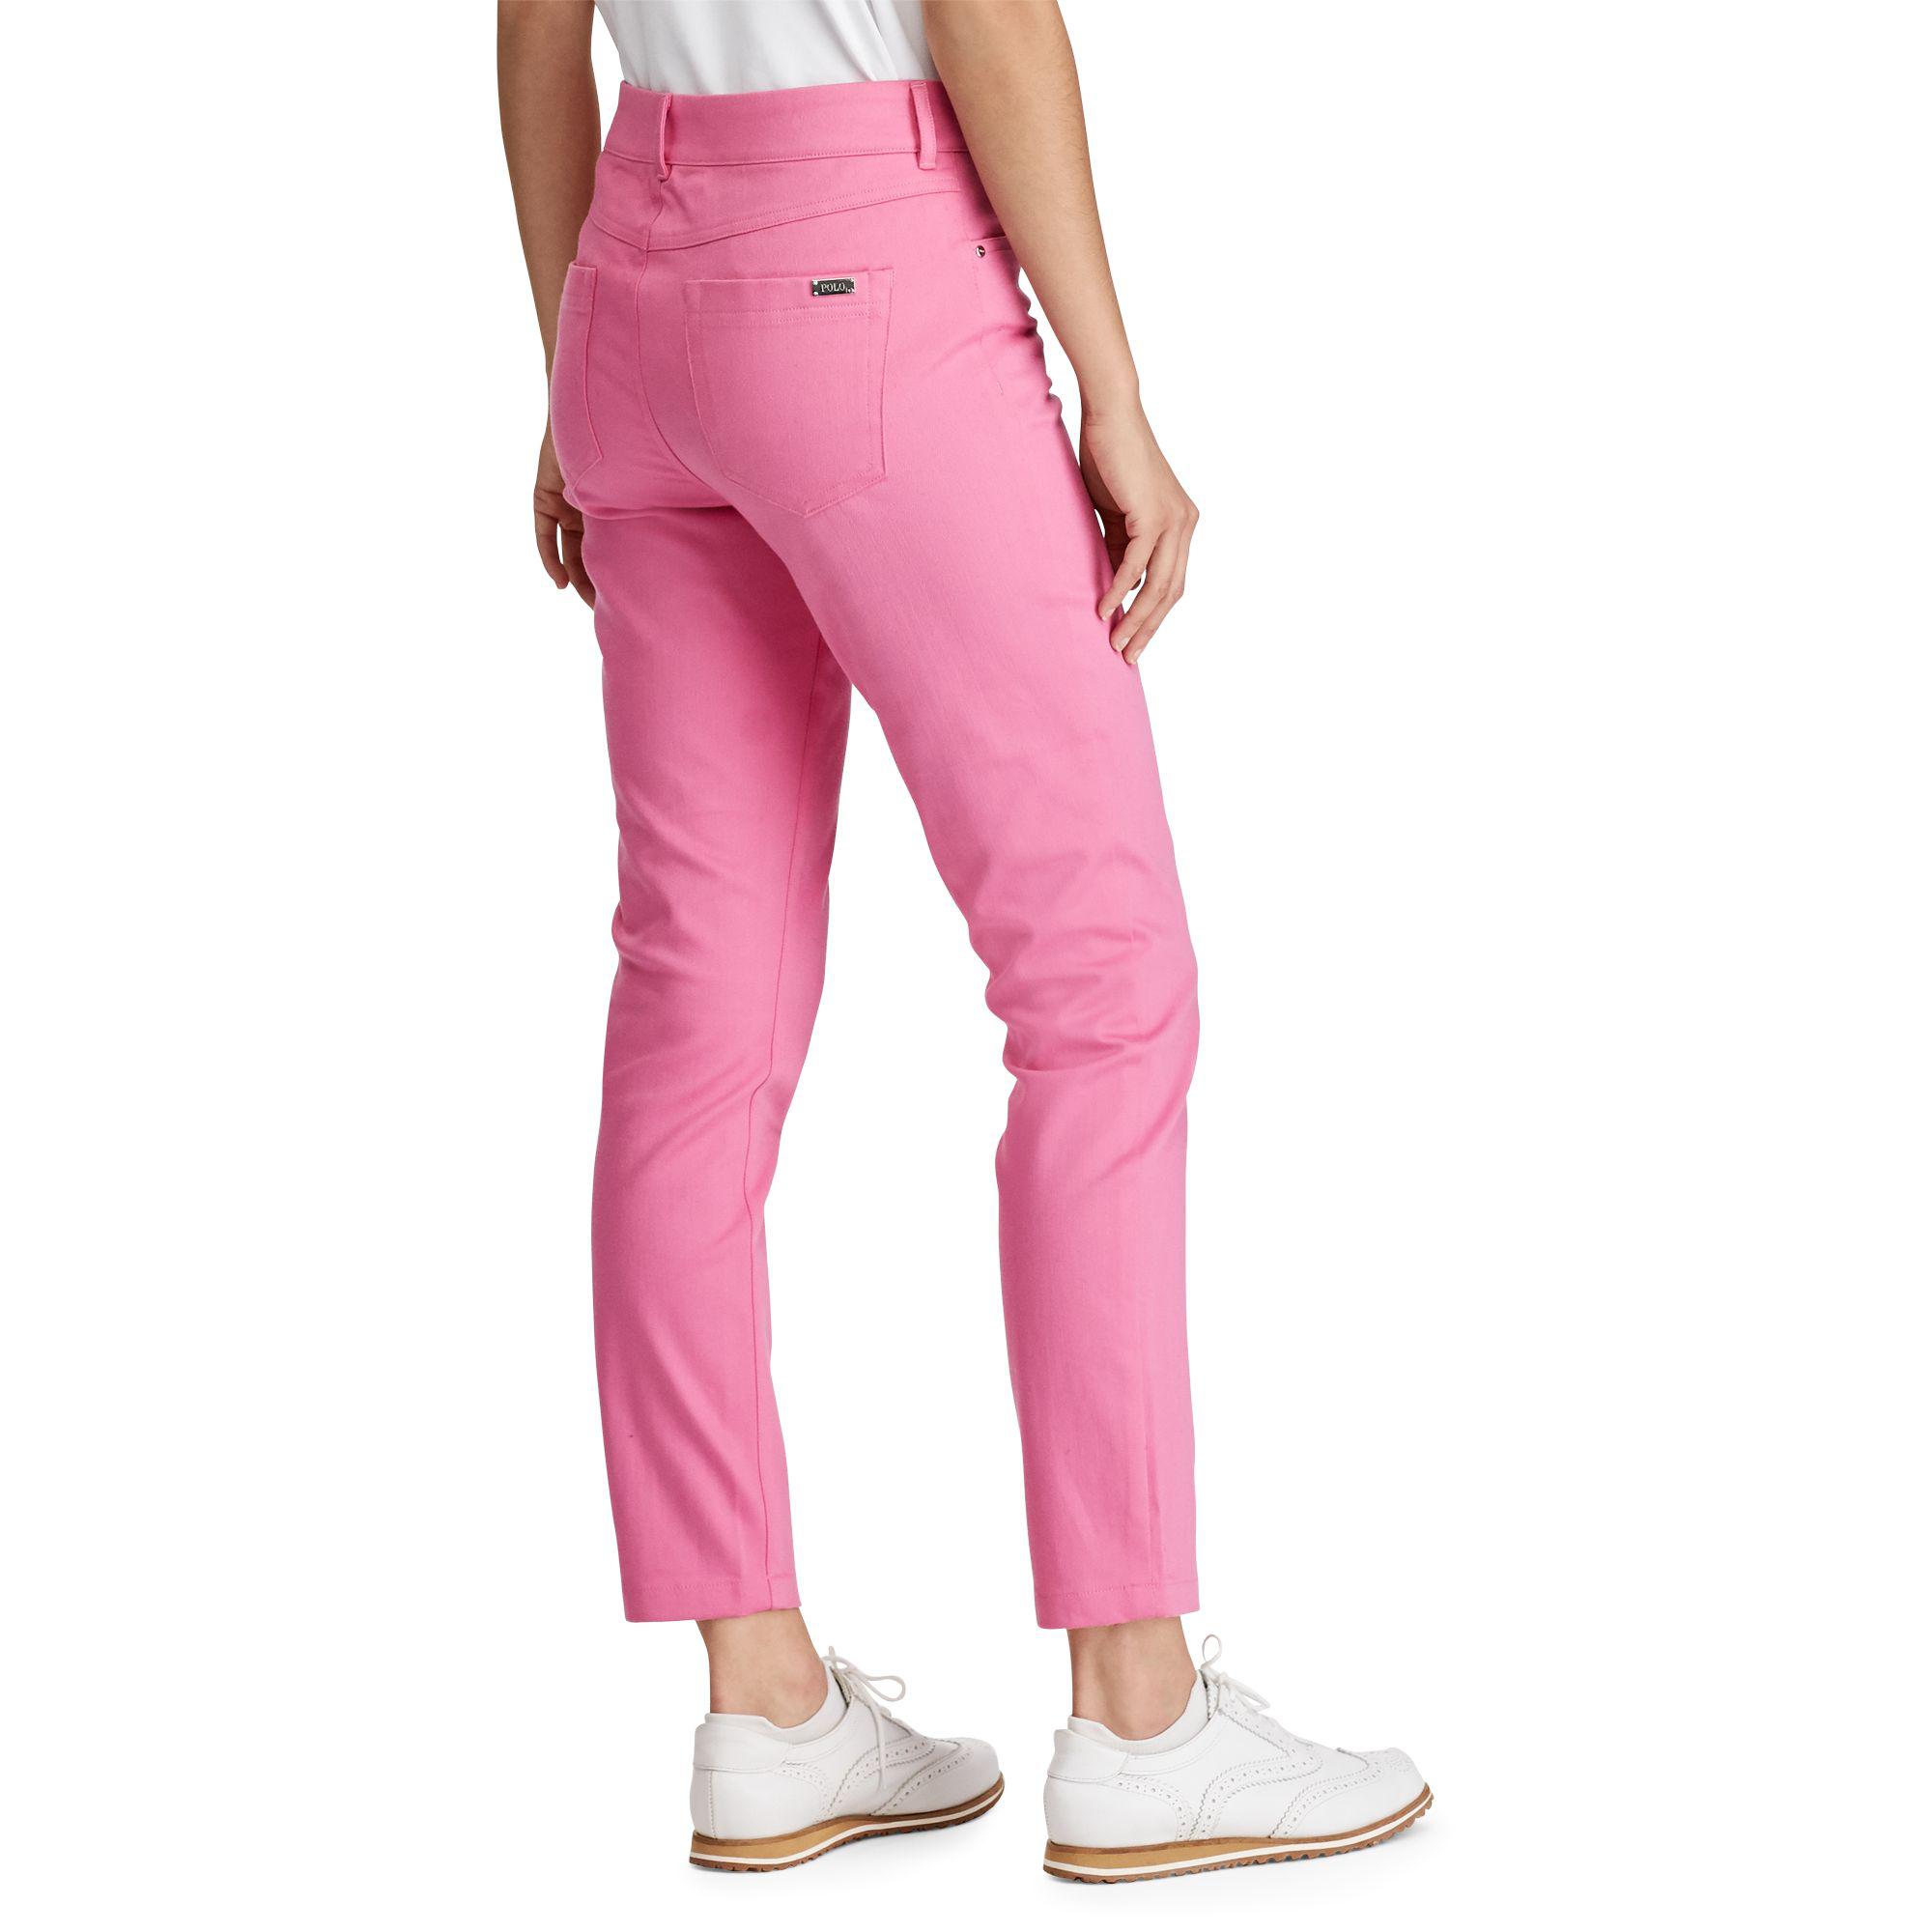 Lyst - Ralph Lauren Golf Stretch Twill Golf Pant in Pink